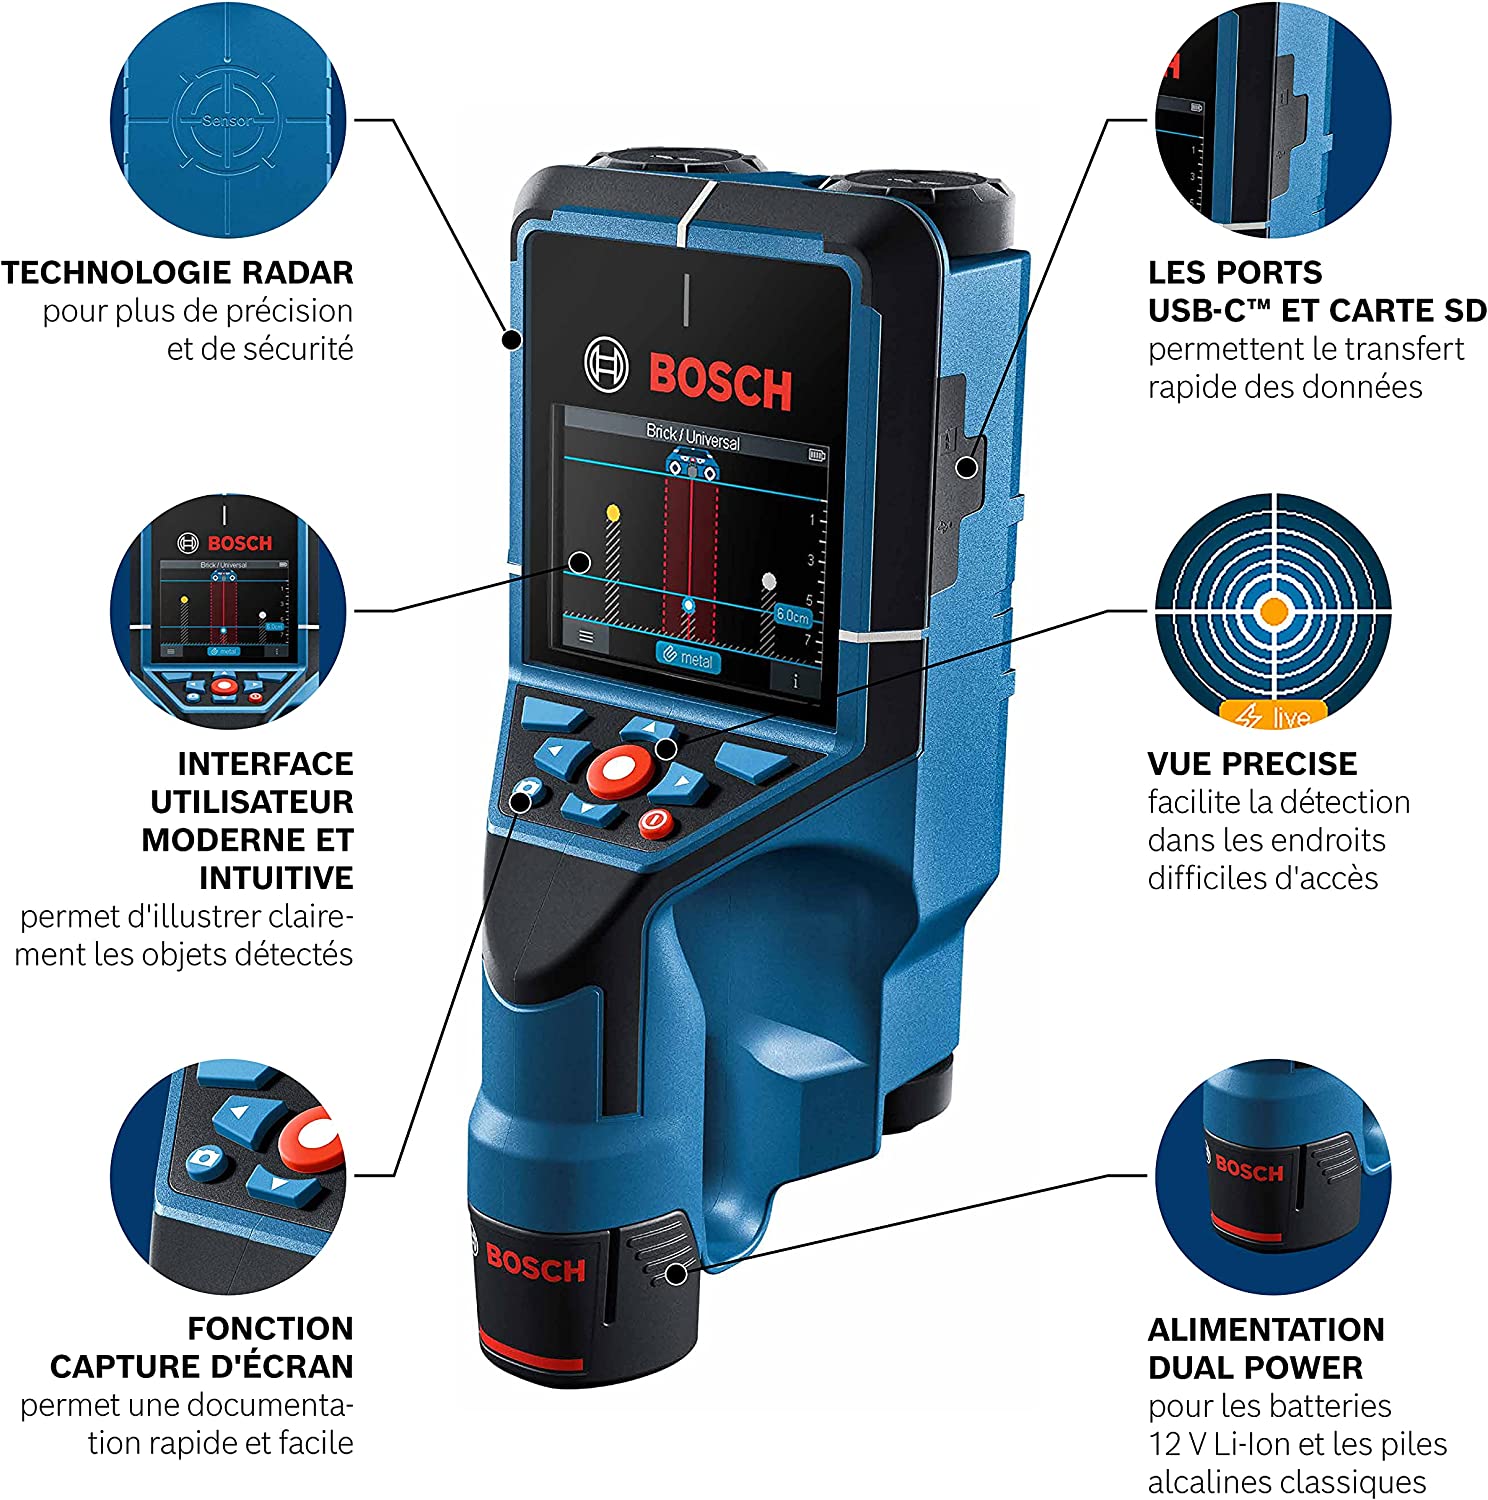 vignette du produit: Bosch Professional 12V System Scanner mural Bosch D-tect 200 C